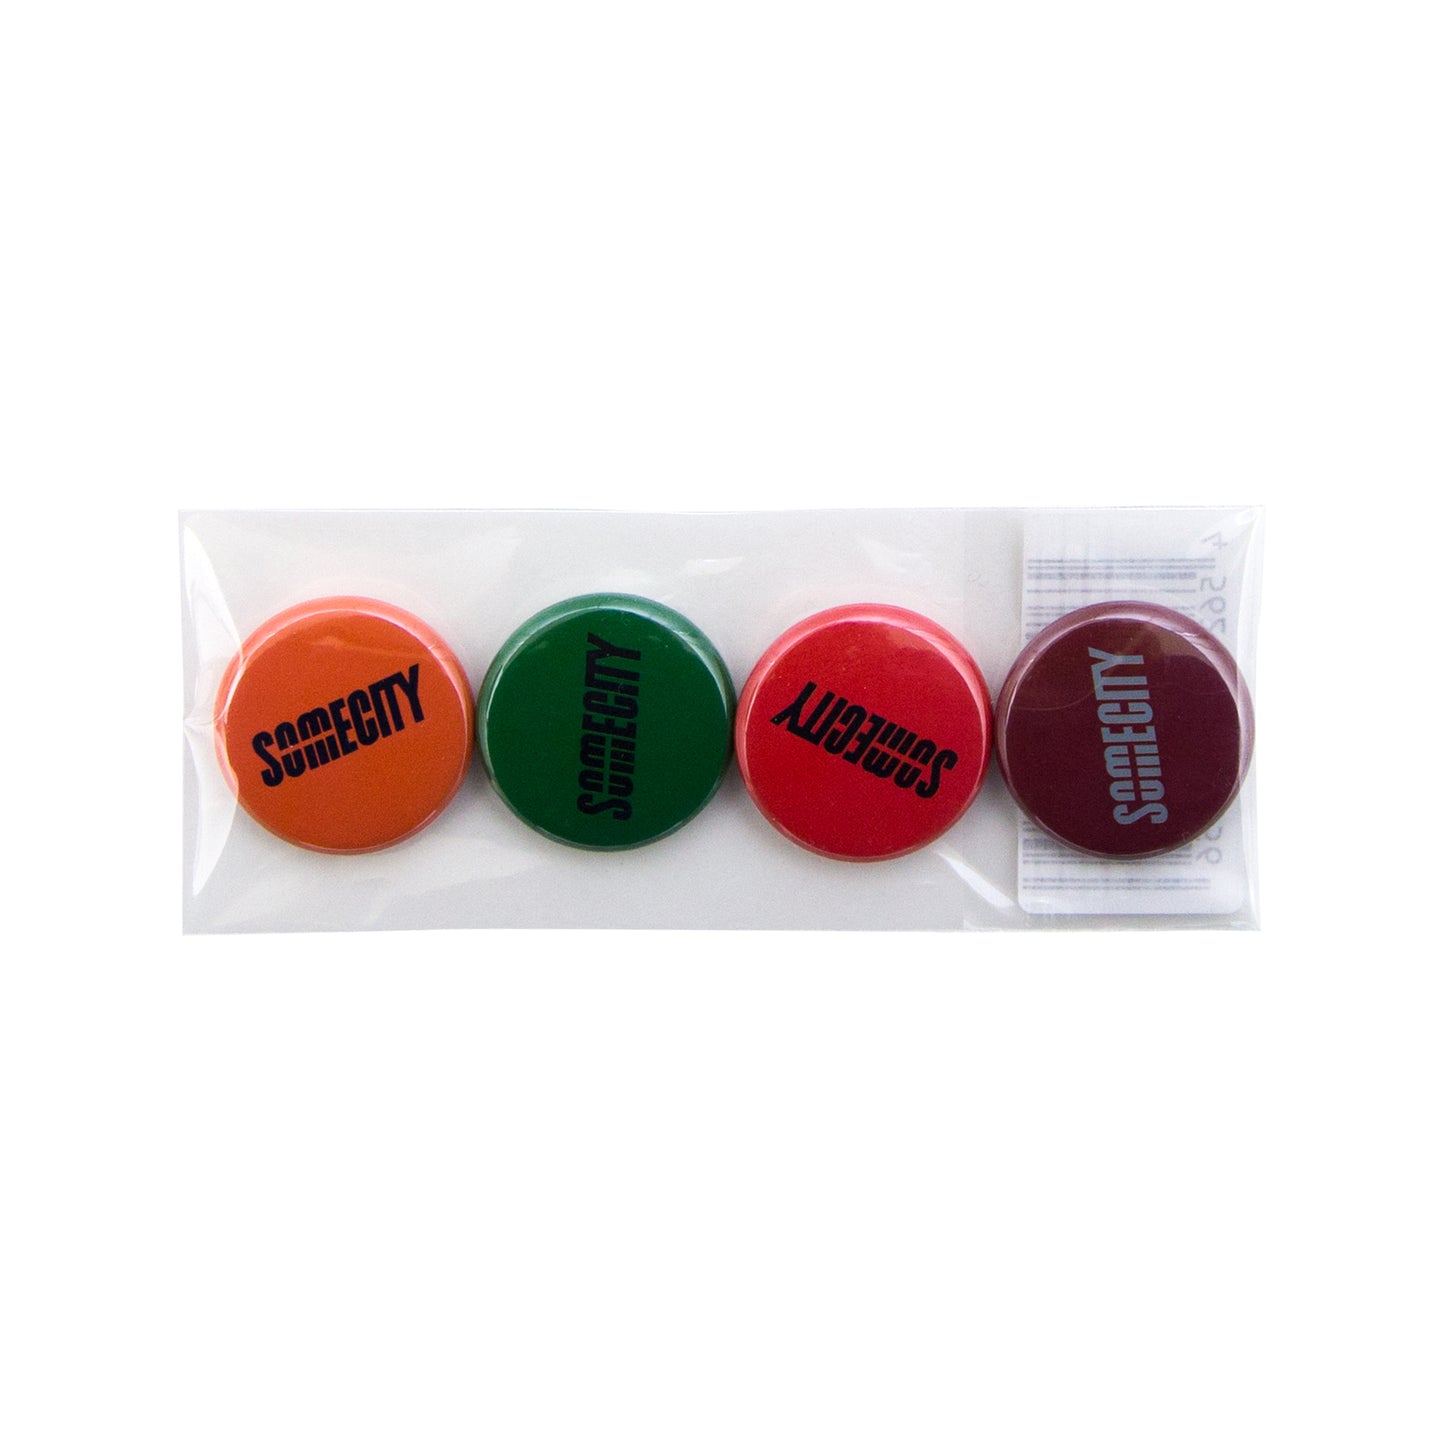 SOMECITY Button Badge (Orange/Green/Red/Brown)